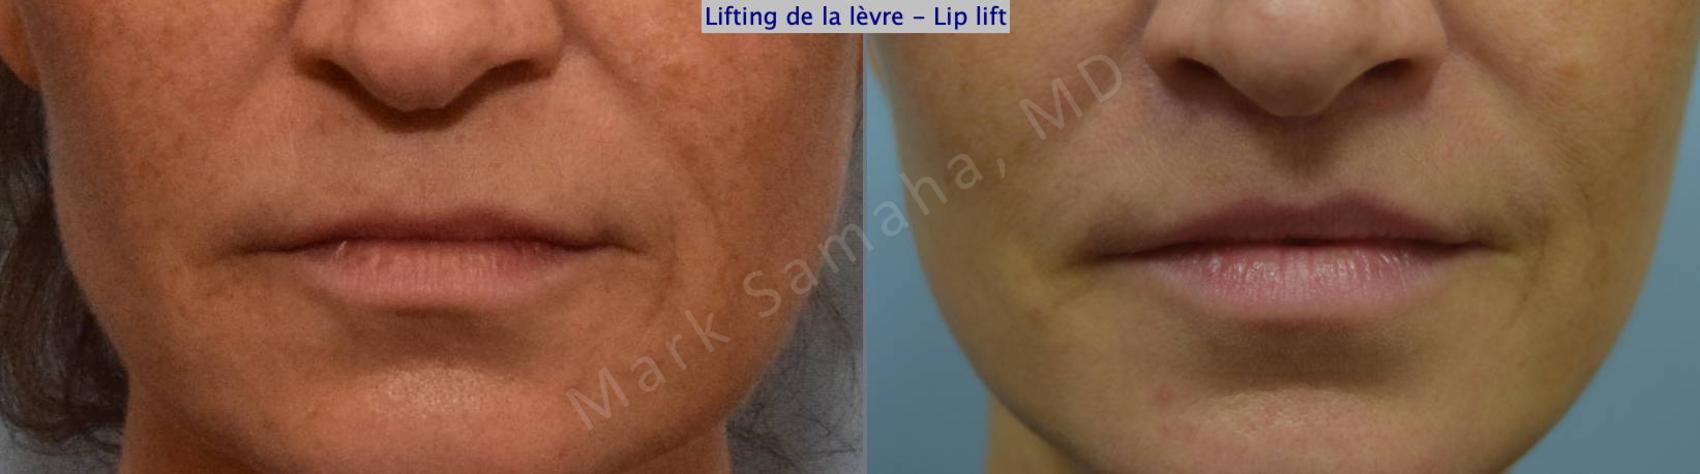 Before & After Lifting de la lèvre supérieure / Lip Lift  Case 131 View #1 View in Montreal, QC